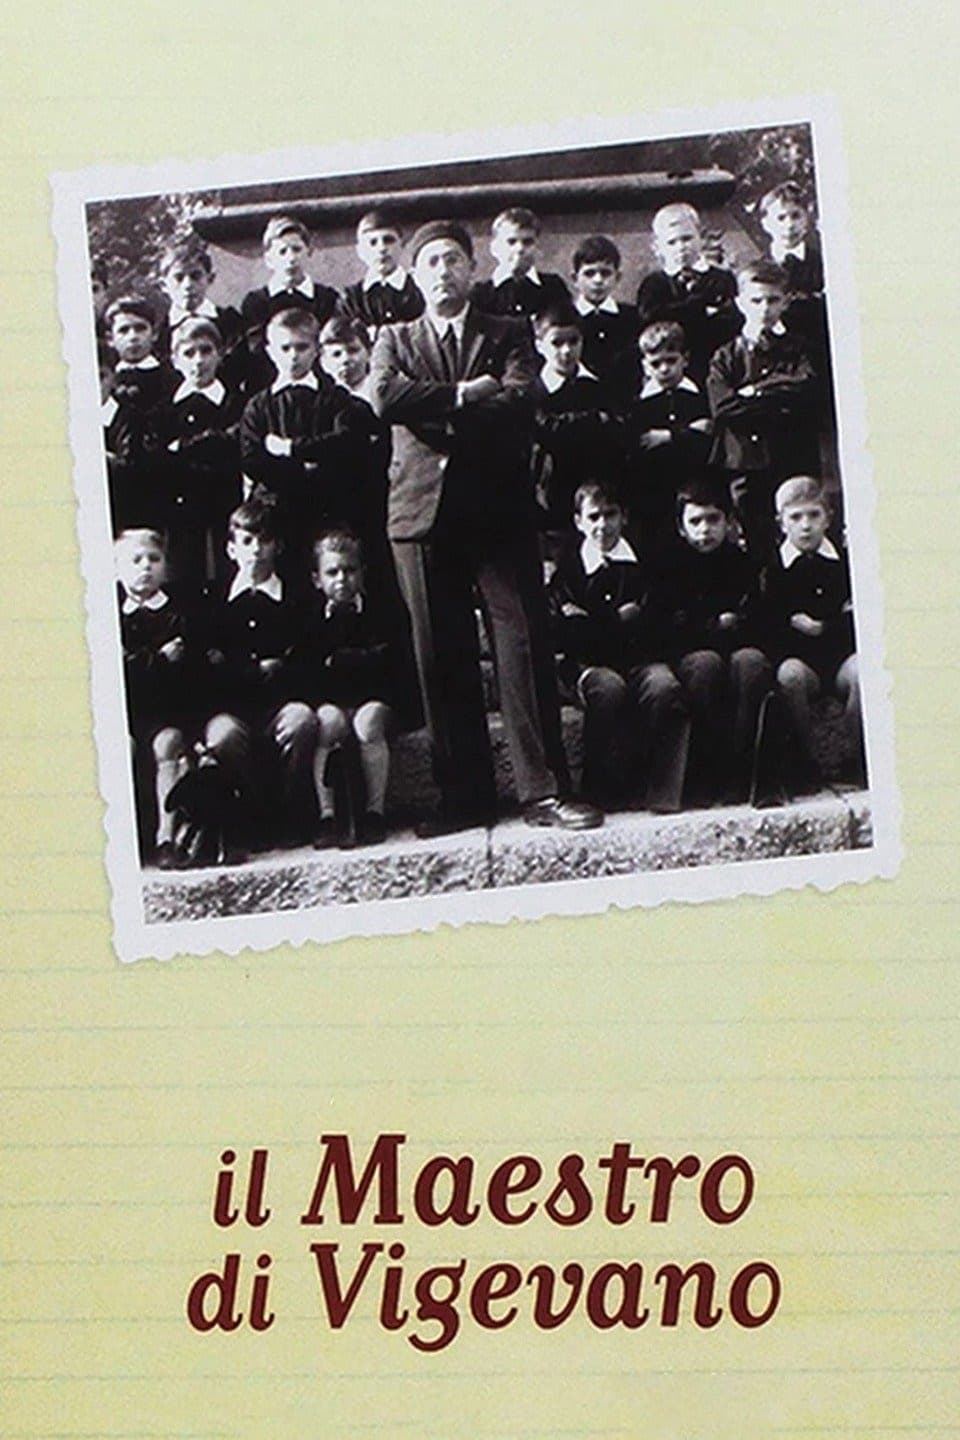 The Teacher from Vigevano (1963)